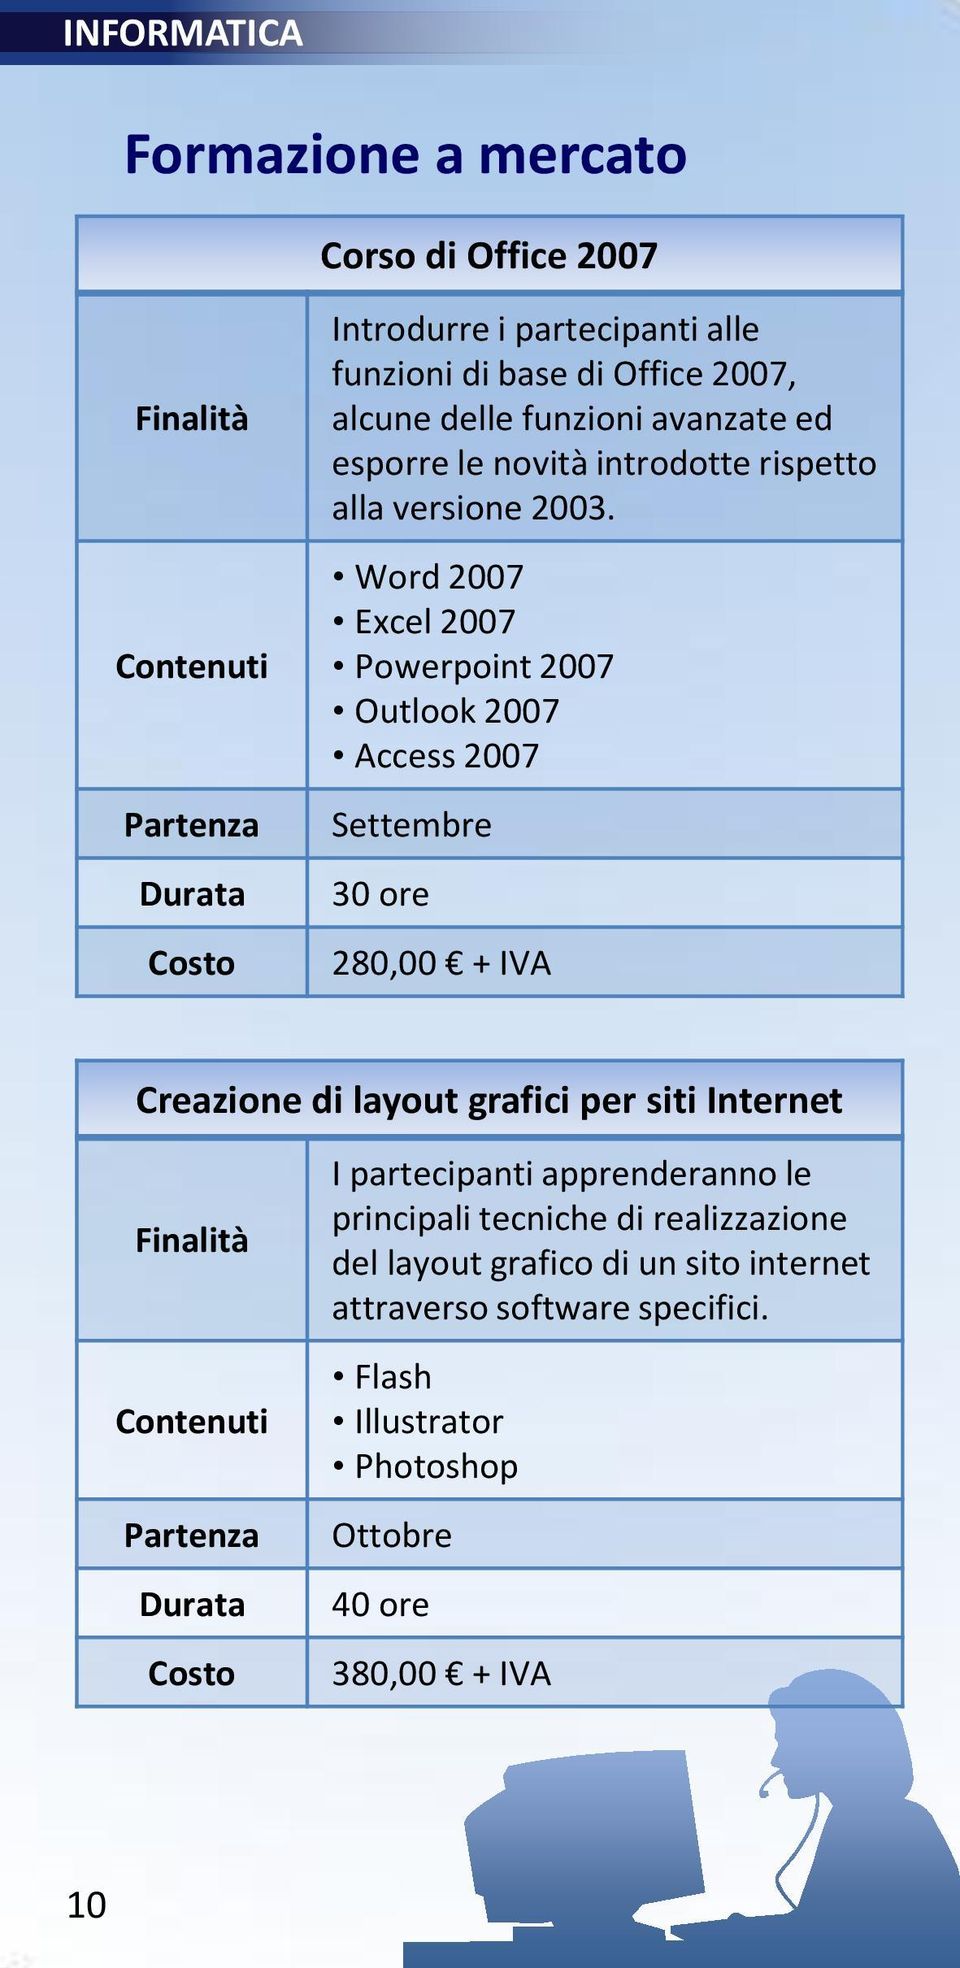 Word 2007 Excel 2007 Powerpoint 2007 Outlook 2007 Access 2007 Settembre 30 ore 280,00 + IVA Creazione di layout grafici per siti Internet